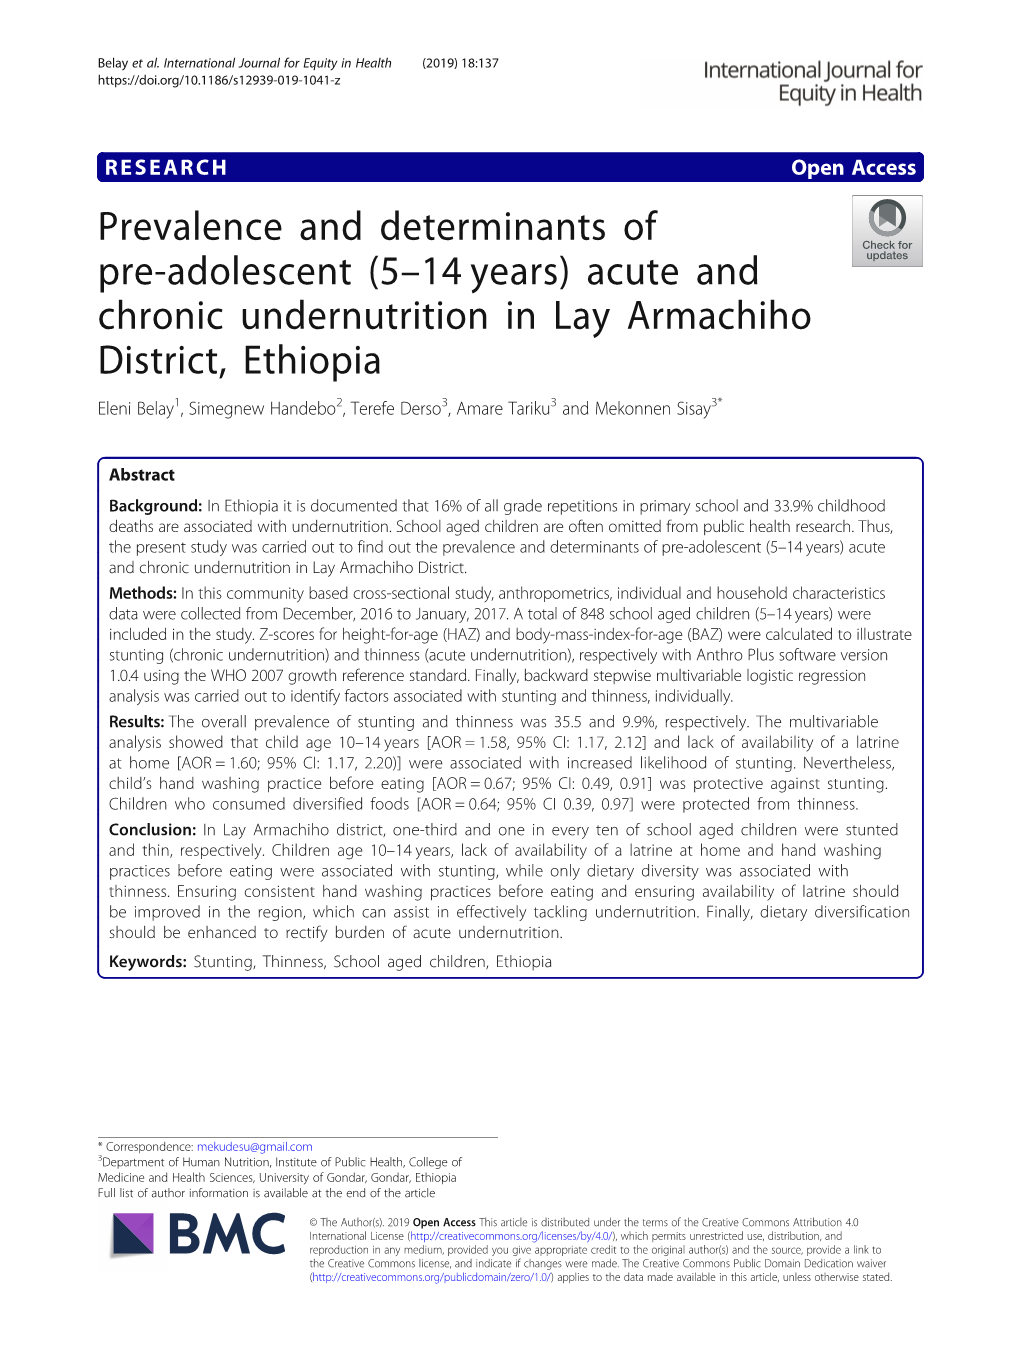 Acute and Chronic Undernutrition in Lay Armachiho District, Ethiopia Eleni Belay1, Simegnew Handebo2, Terefe Derso3, Amare Tariku3 and Mekonnen Sisay3*